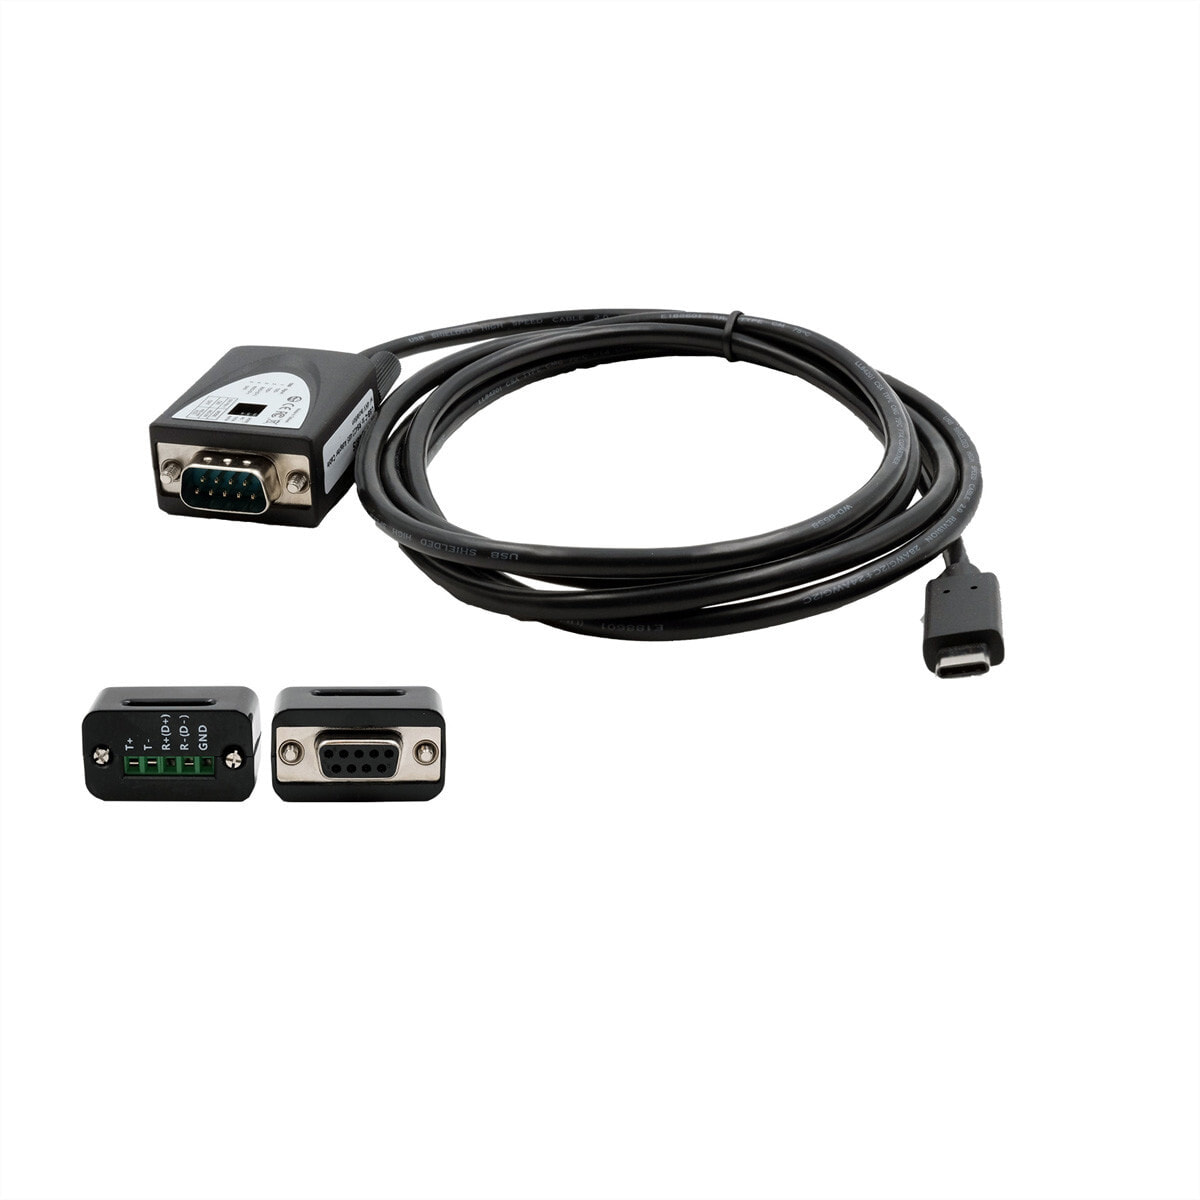 Компьютерный разъем или переходник Exsys GmbH USB 2.0 C-Stecker zu Seriell RS-422/485 Kabel Surge Protection FTDI Chip - Cable